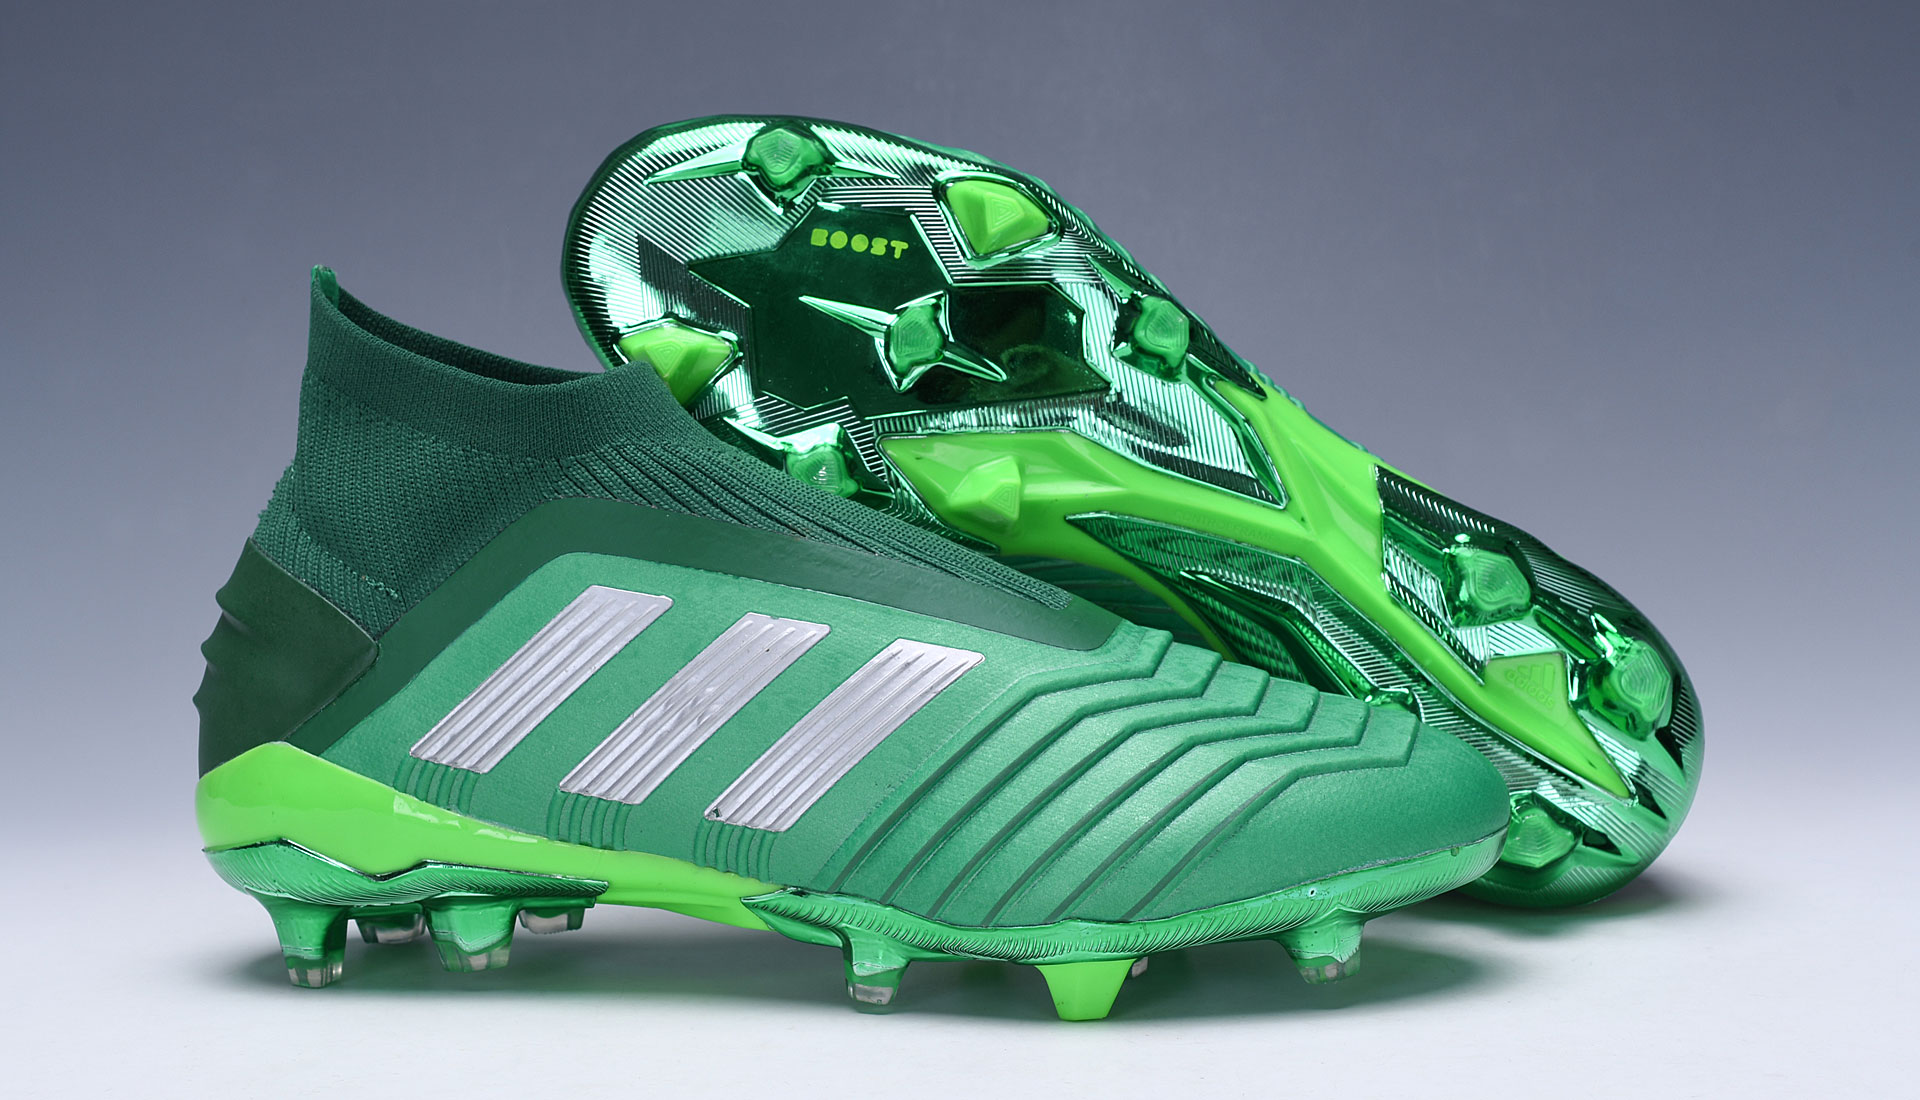 Adidas Predator 19+ FG Soccer Cleats - Green Silver | Top-Performing Footwear